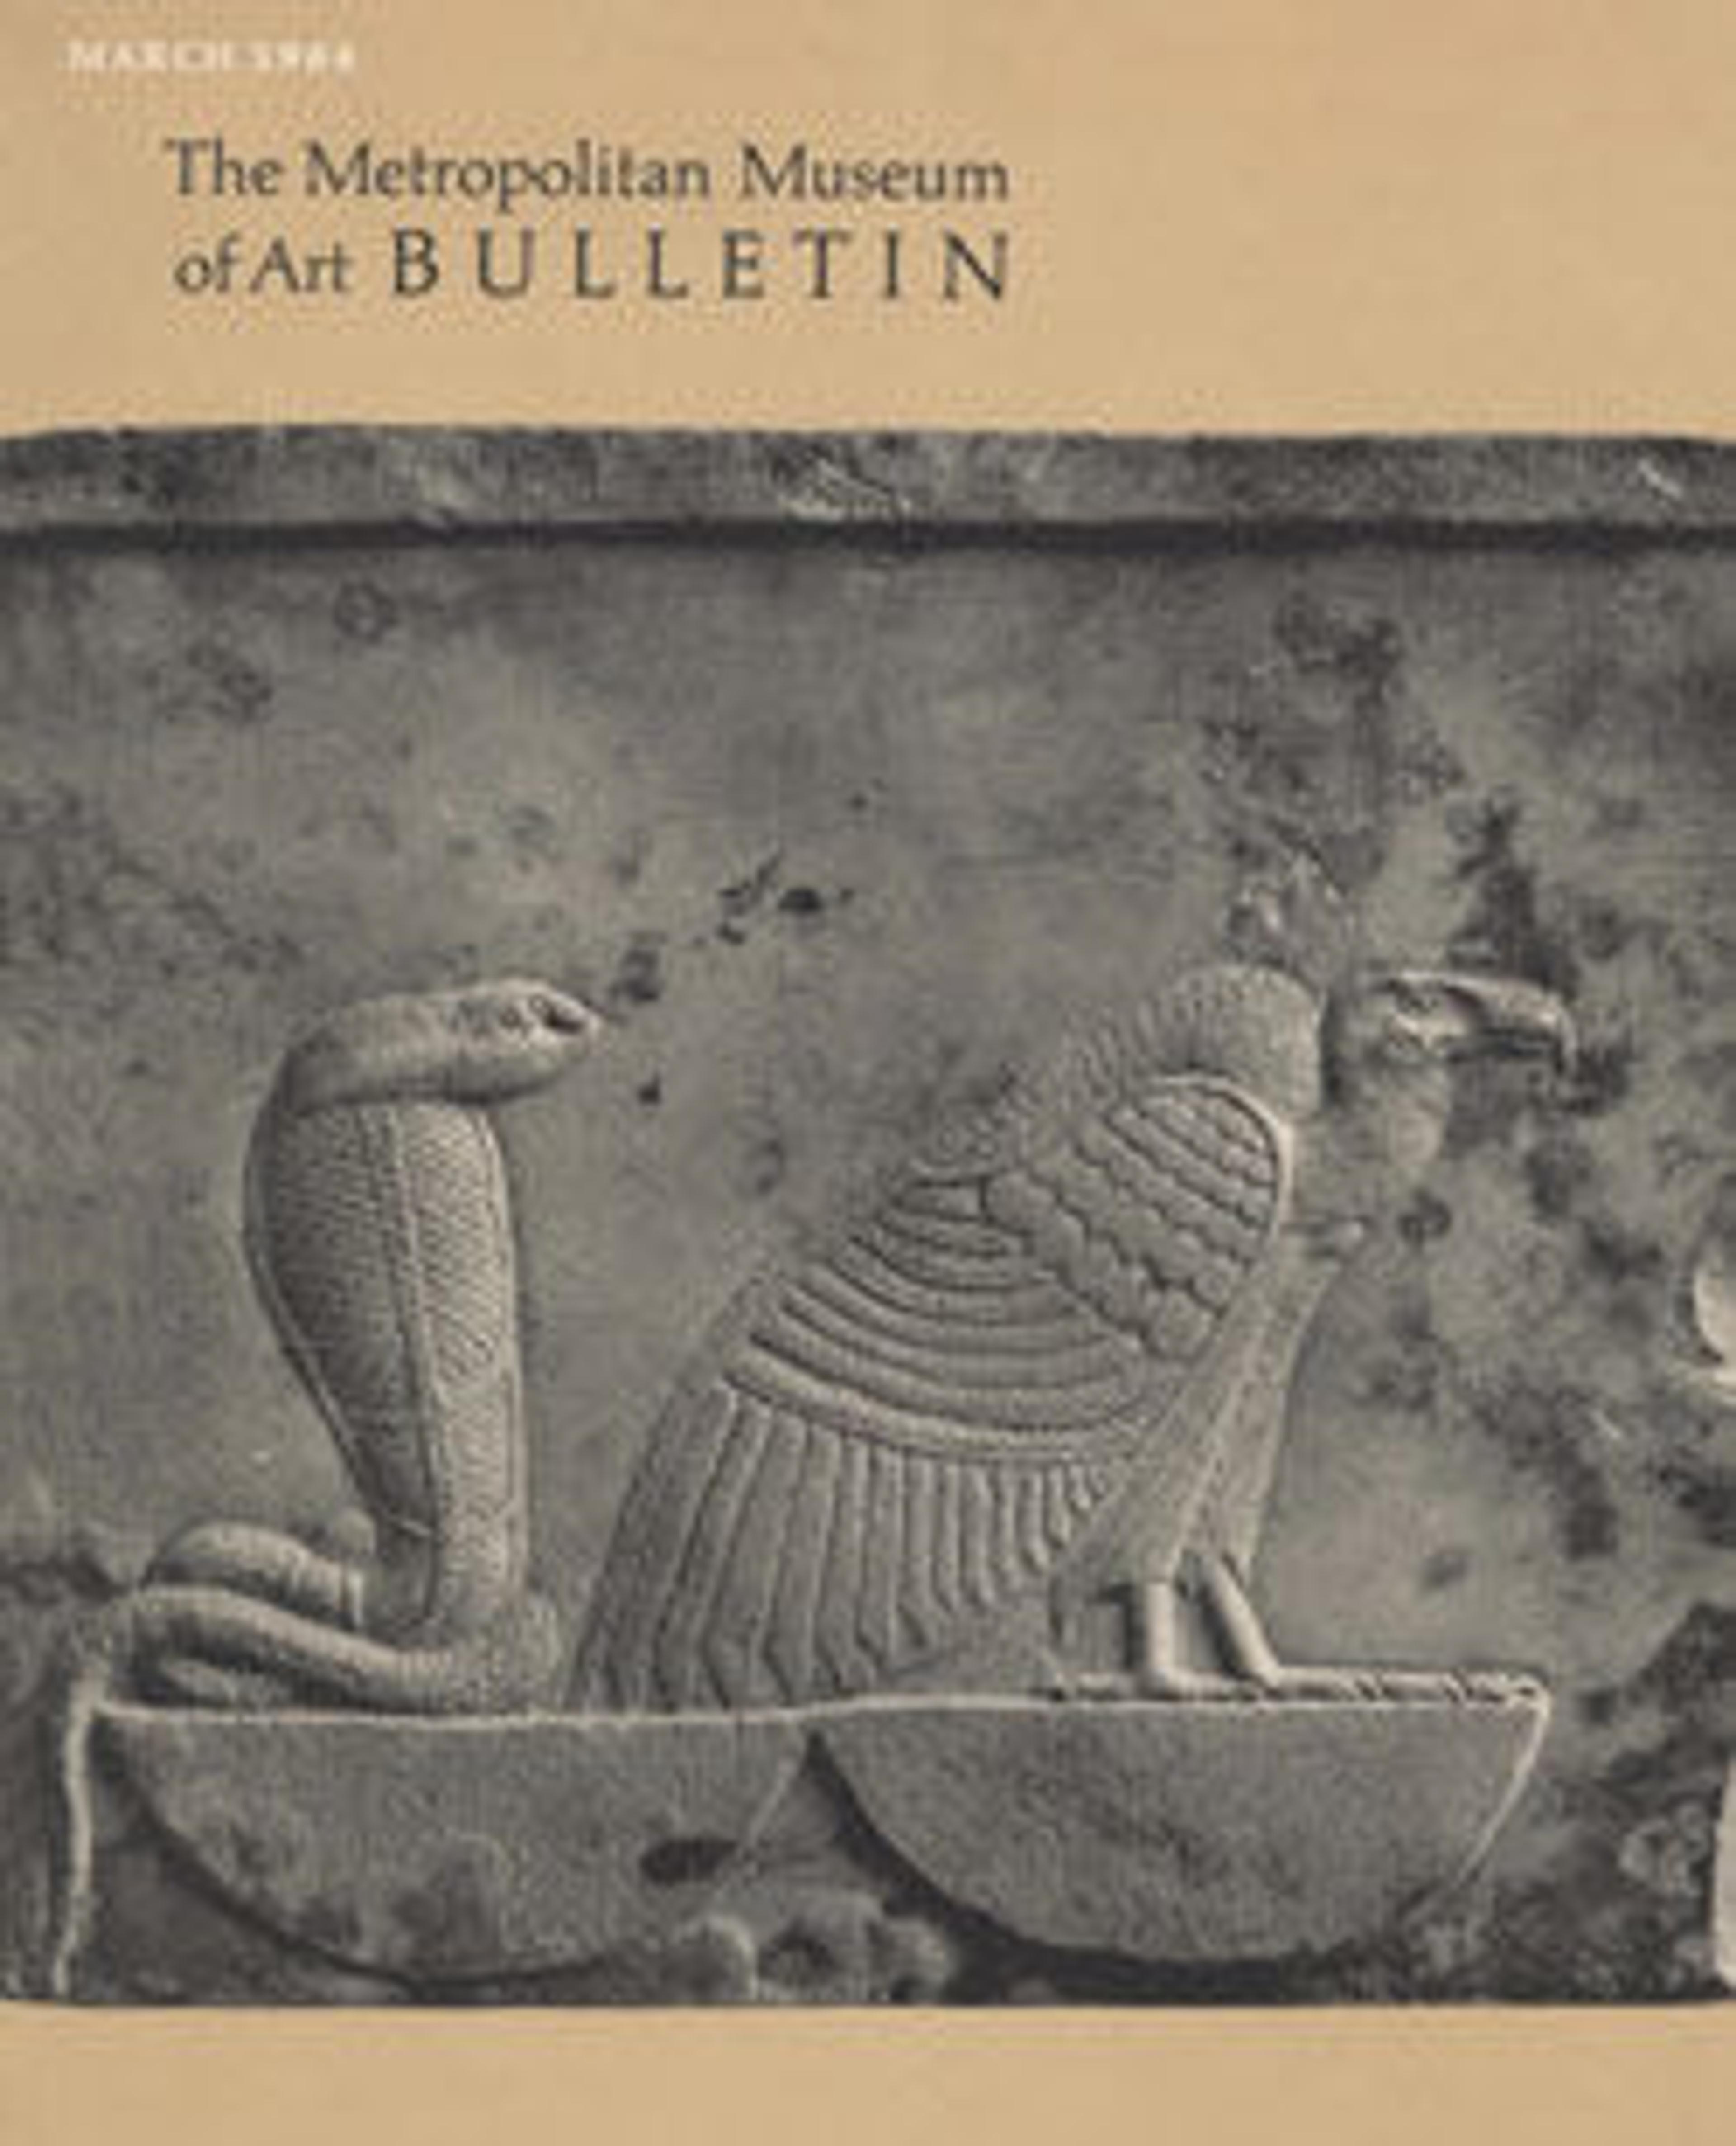 "Egyptian Art": The Metropolitan Museum of Art Bulletin, v. 22, no. 7 (March, 1964)